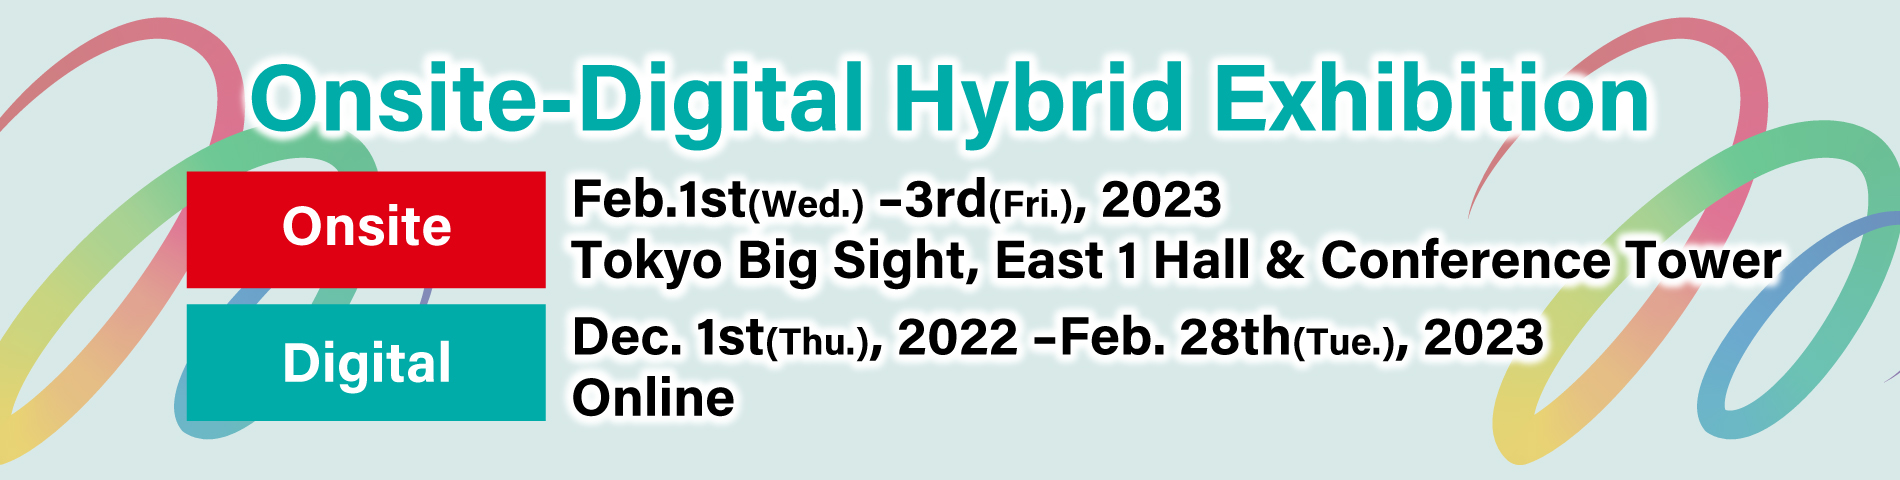 Onsite-Digital Hybrid Exhibition